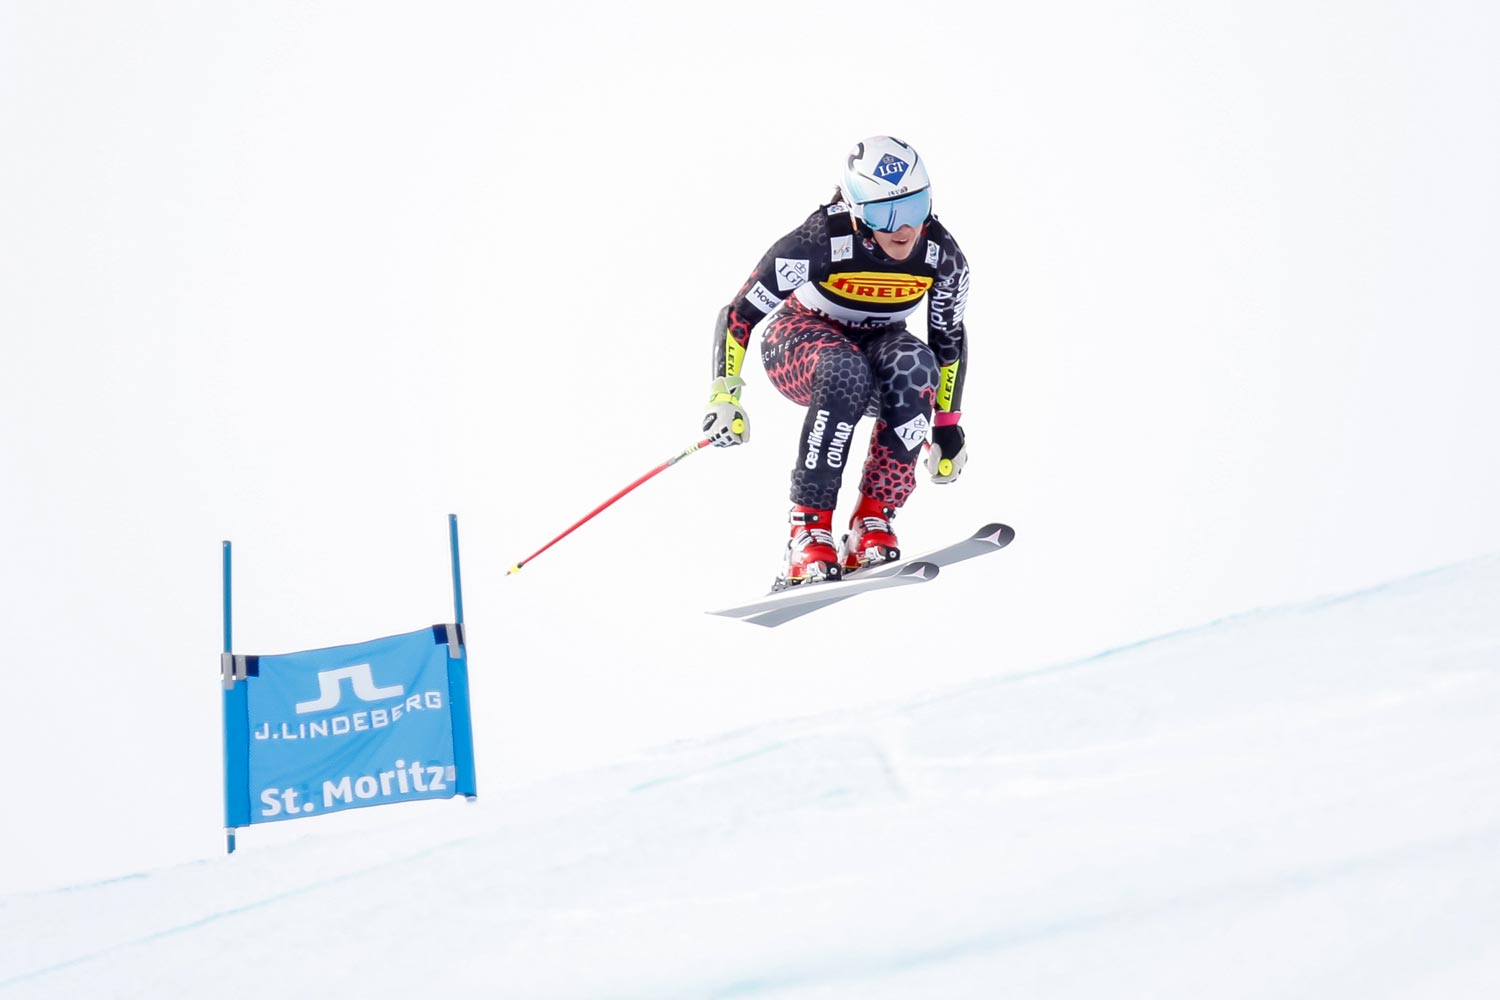 Championnats du monde de ski alpin 2017 St. Moritz, Super G femmes, Tina Weirather